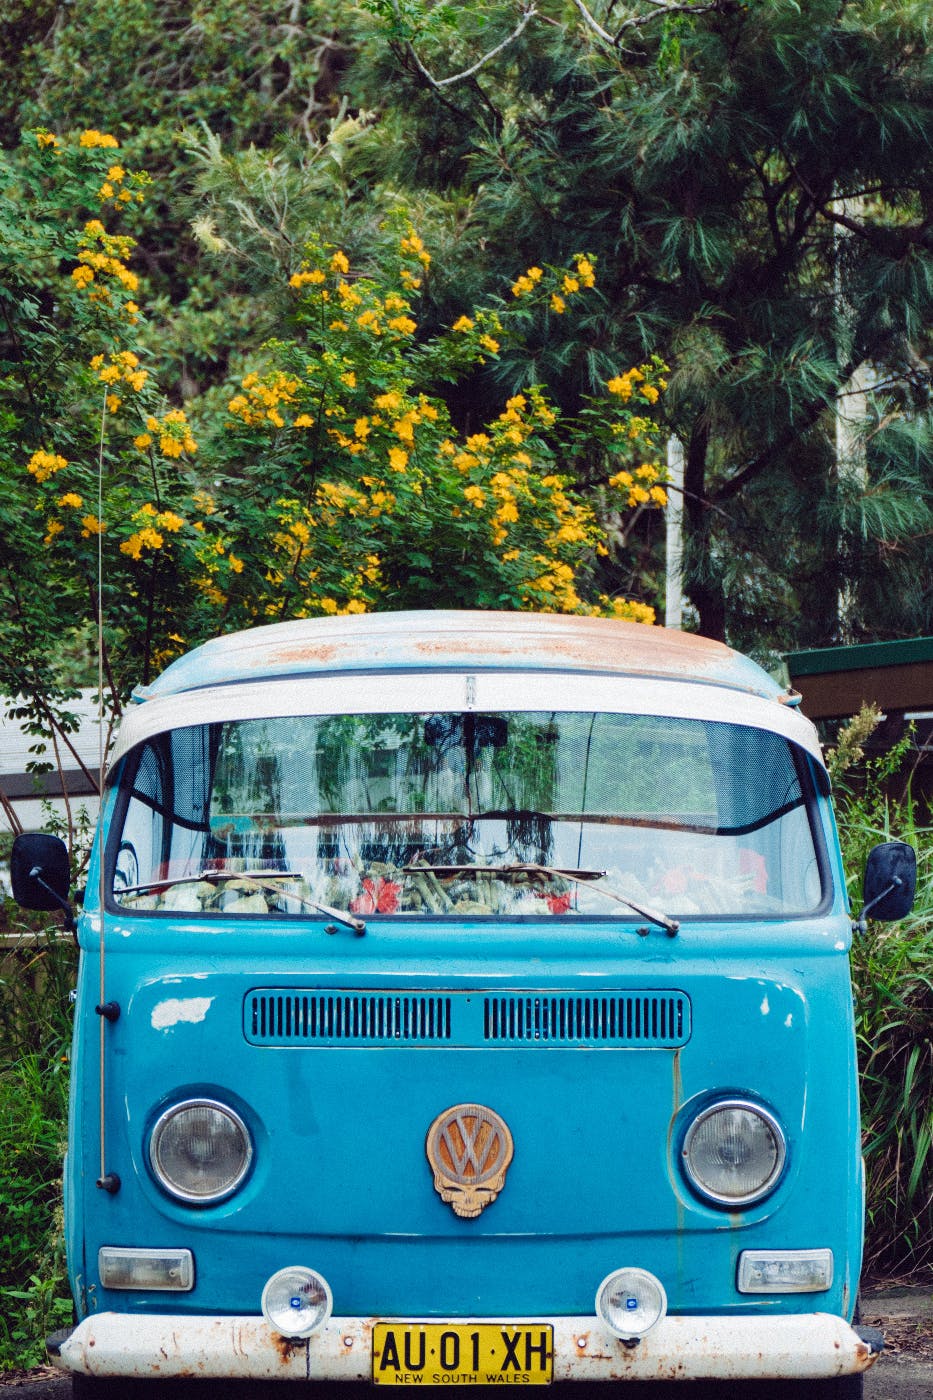 An original VW microbus with a DeadHead VW emblem